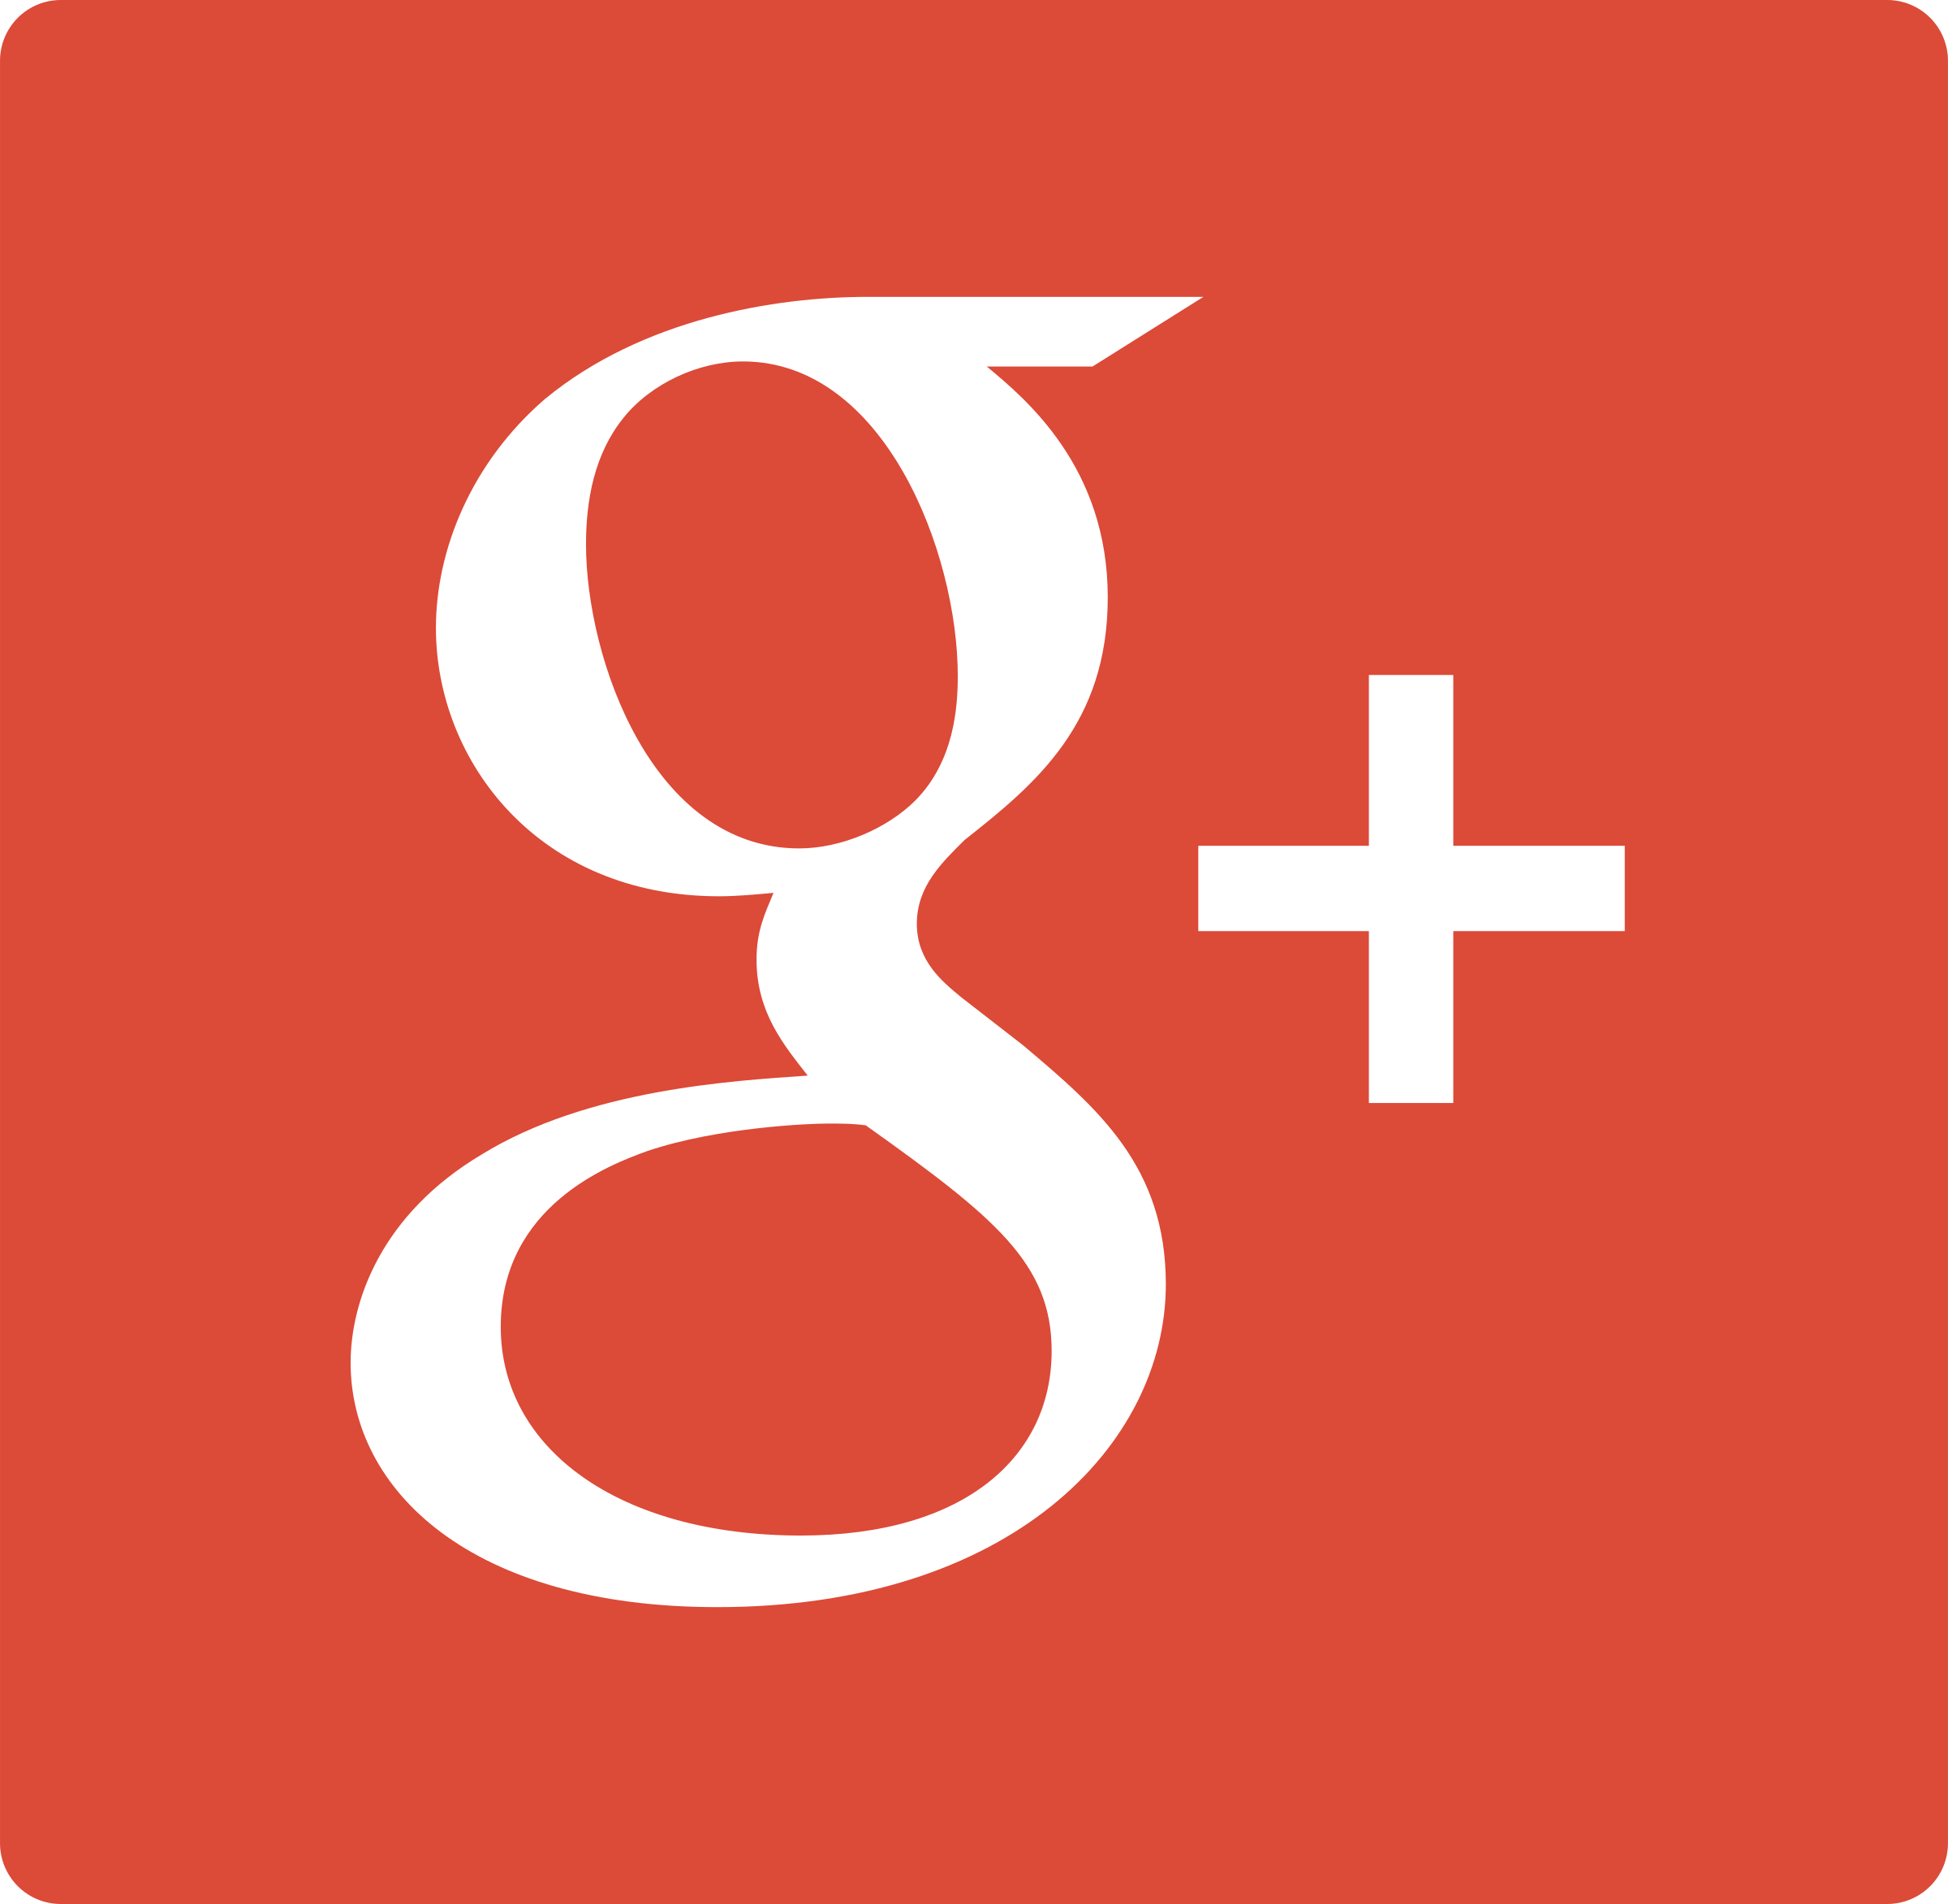 Goggle Plus Logo - Google plus Logo PNG Transparent & SVG Vector - Freebie Supply